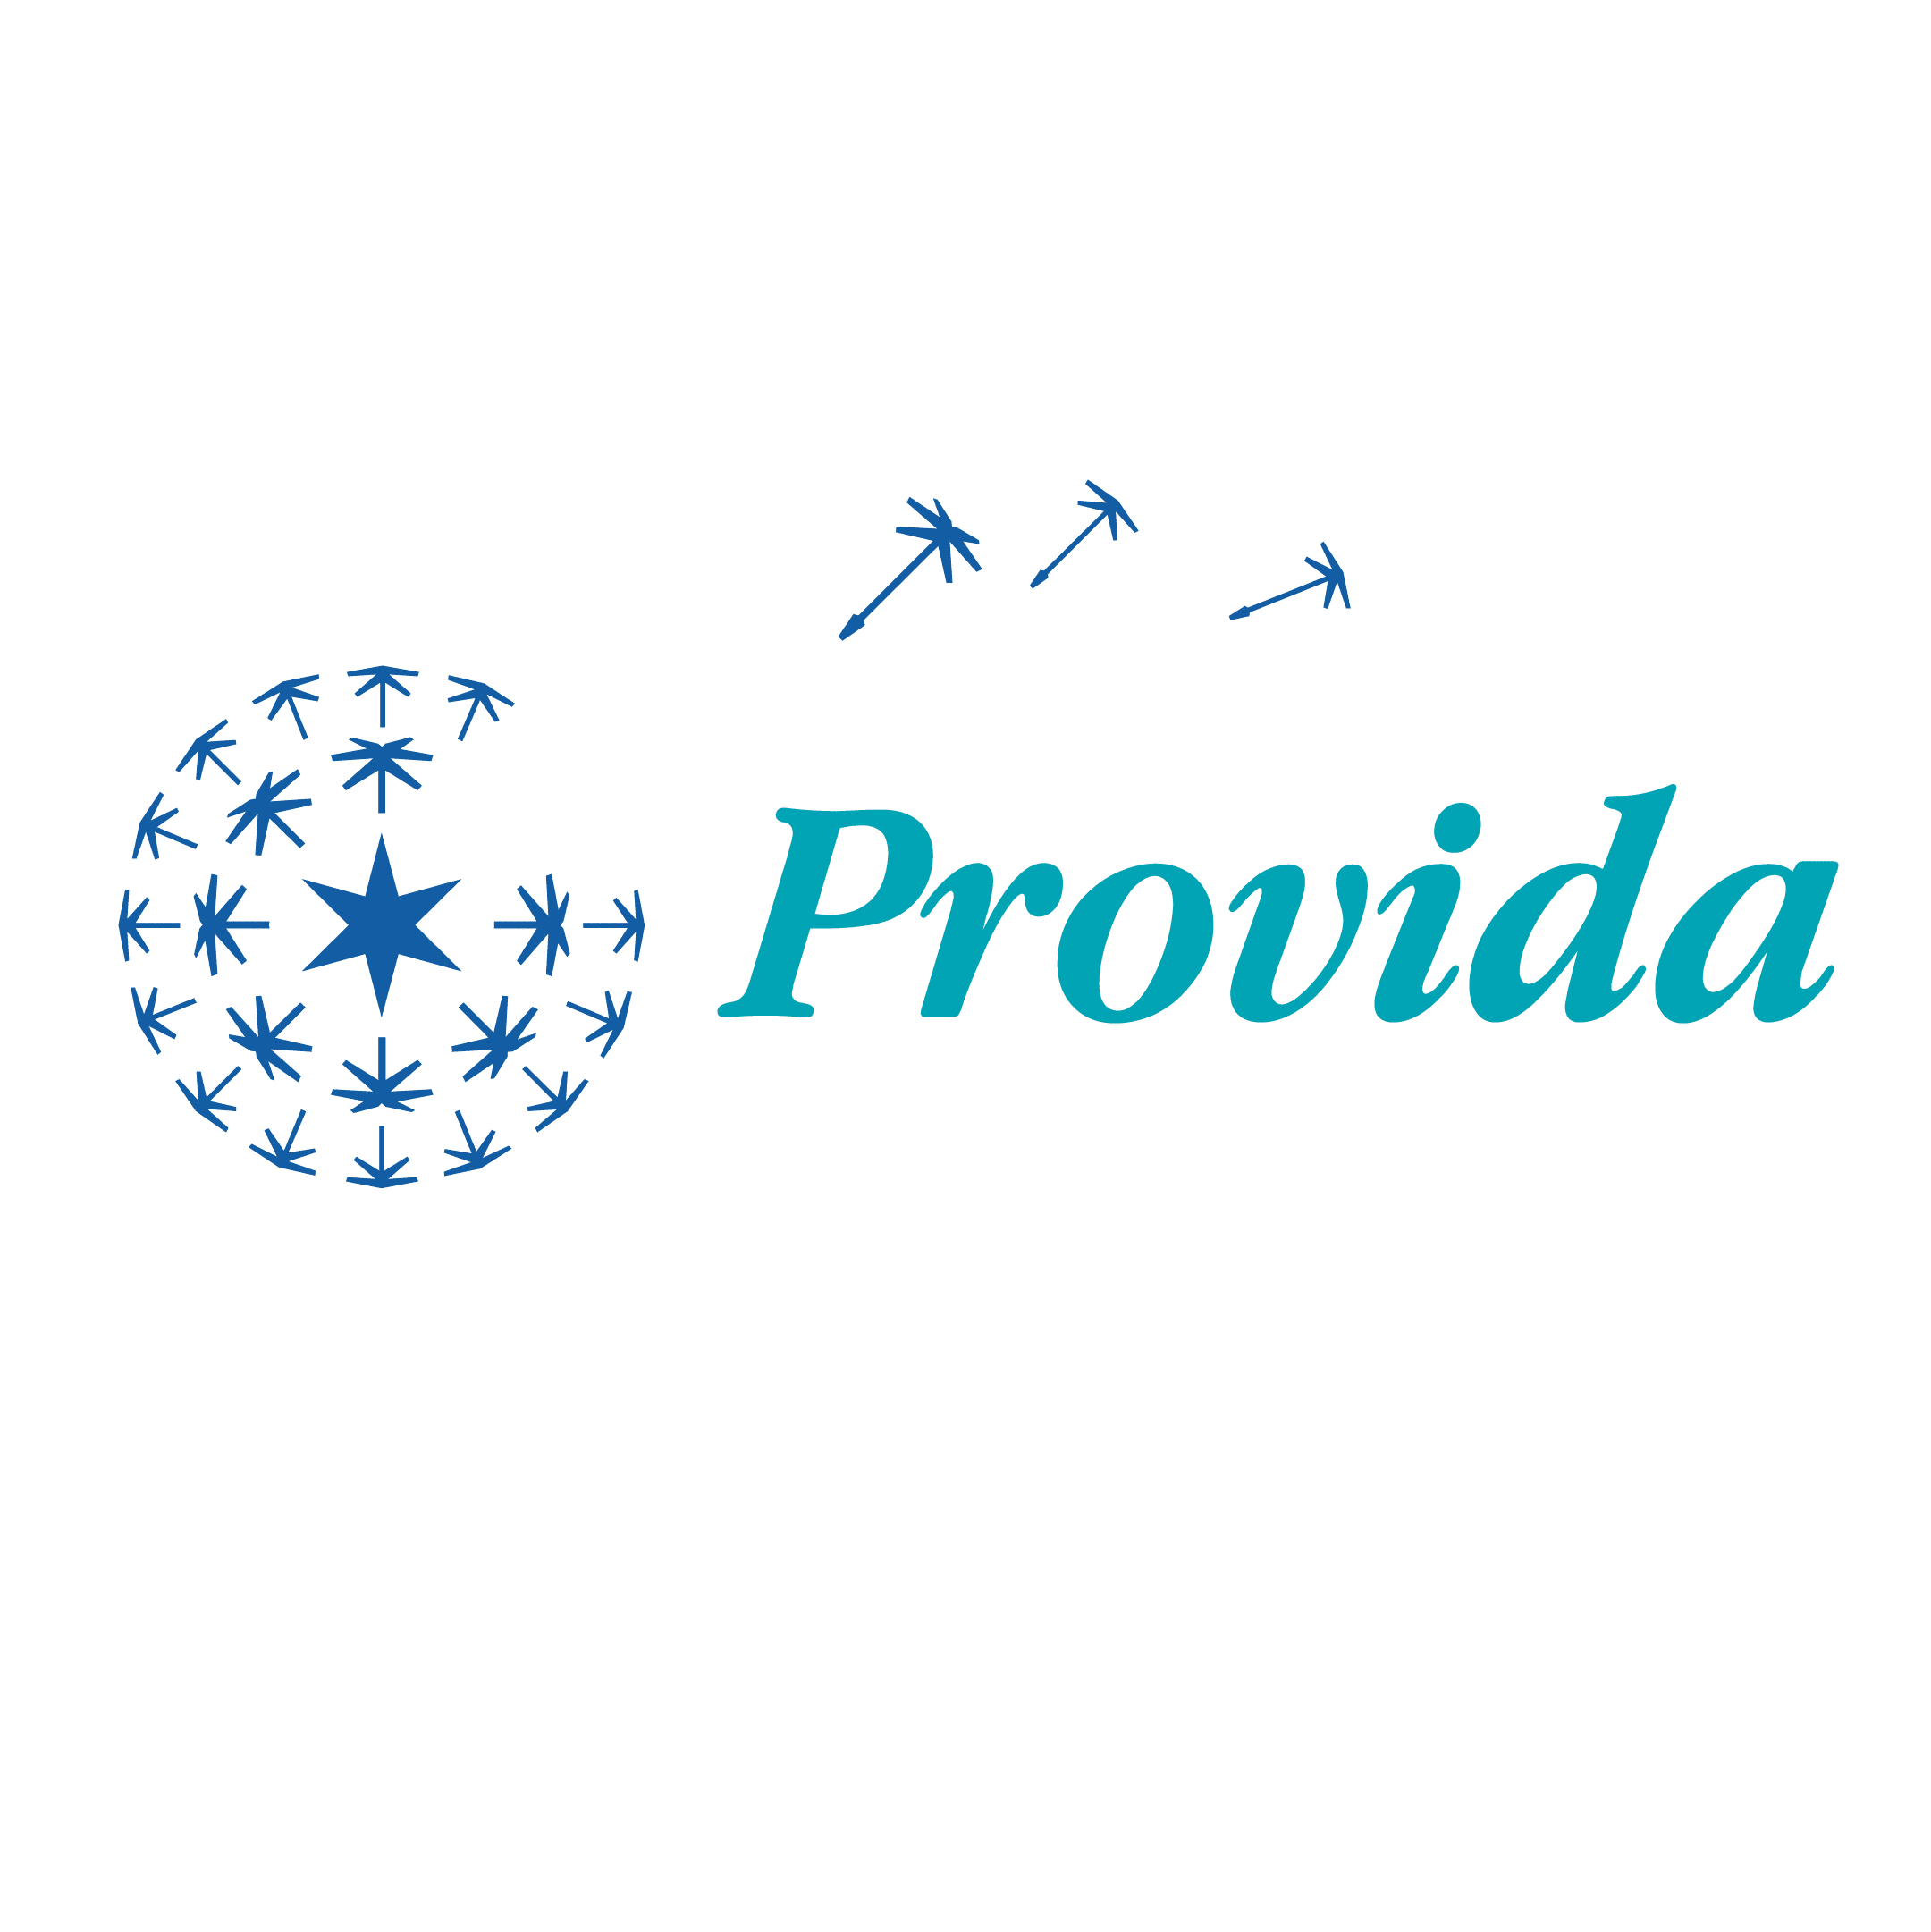 Provida Foods